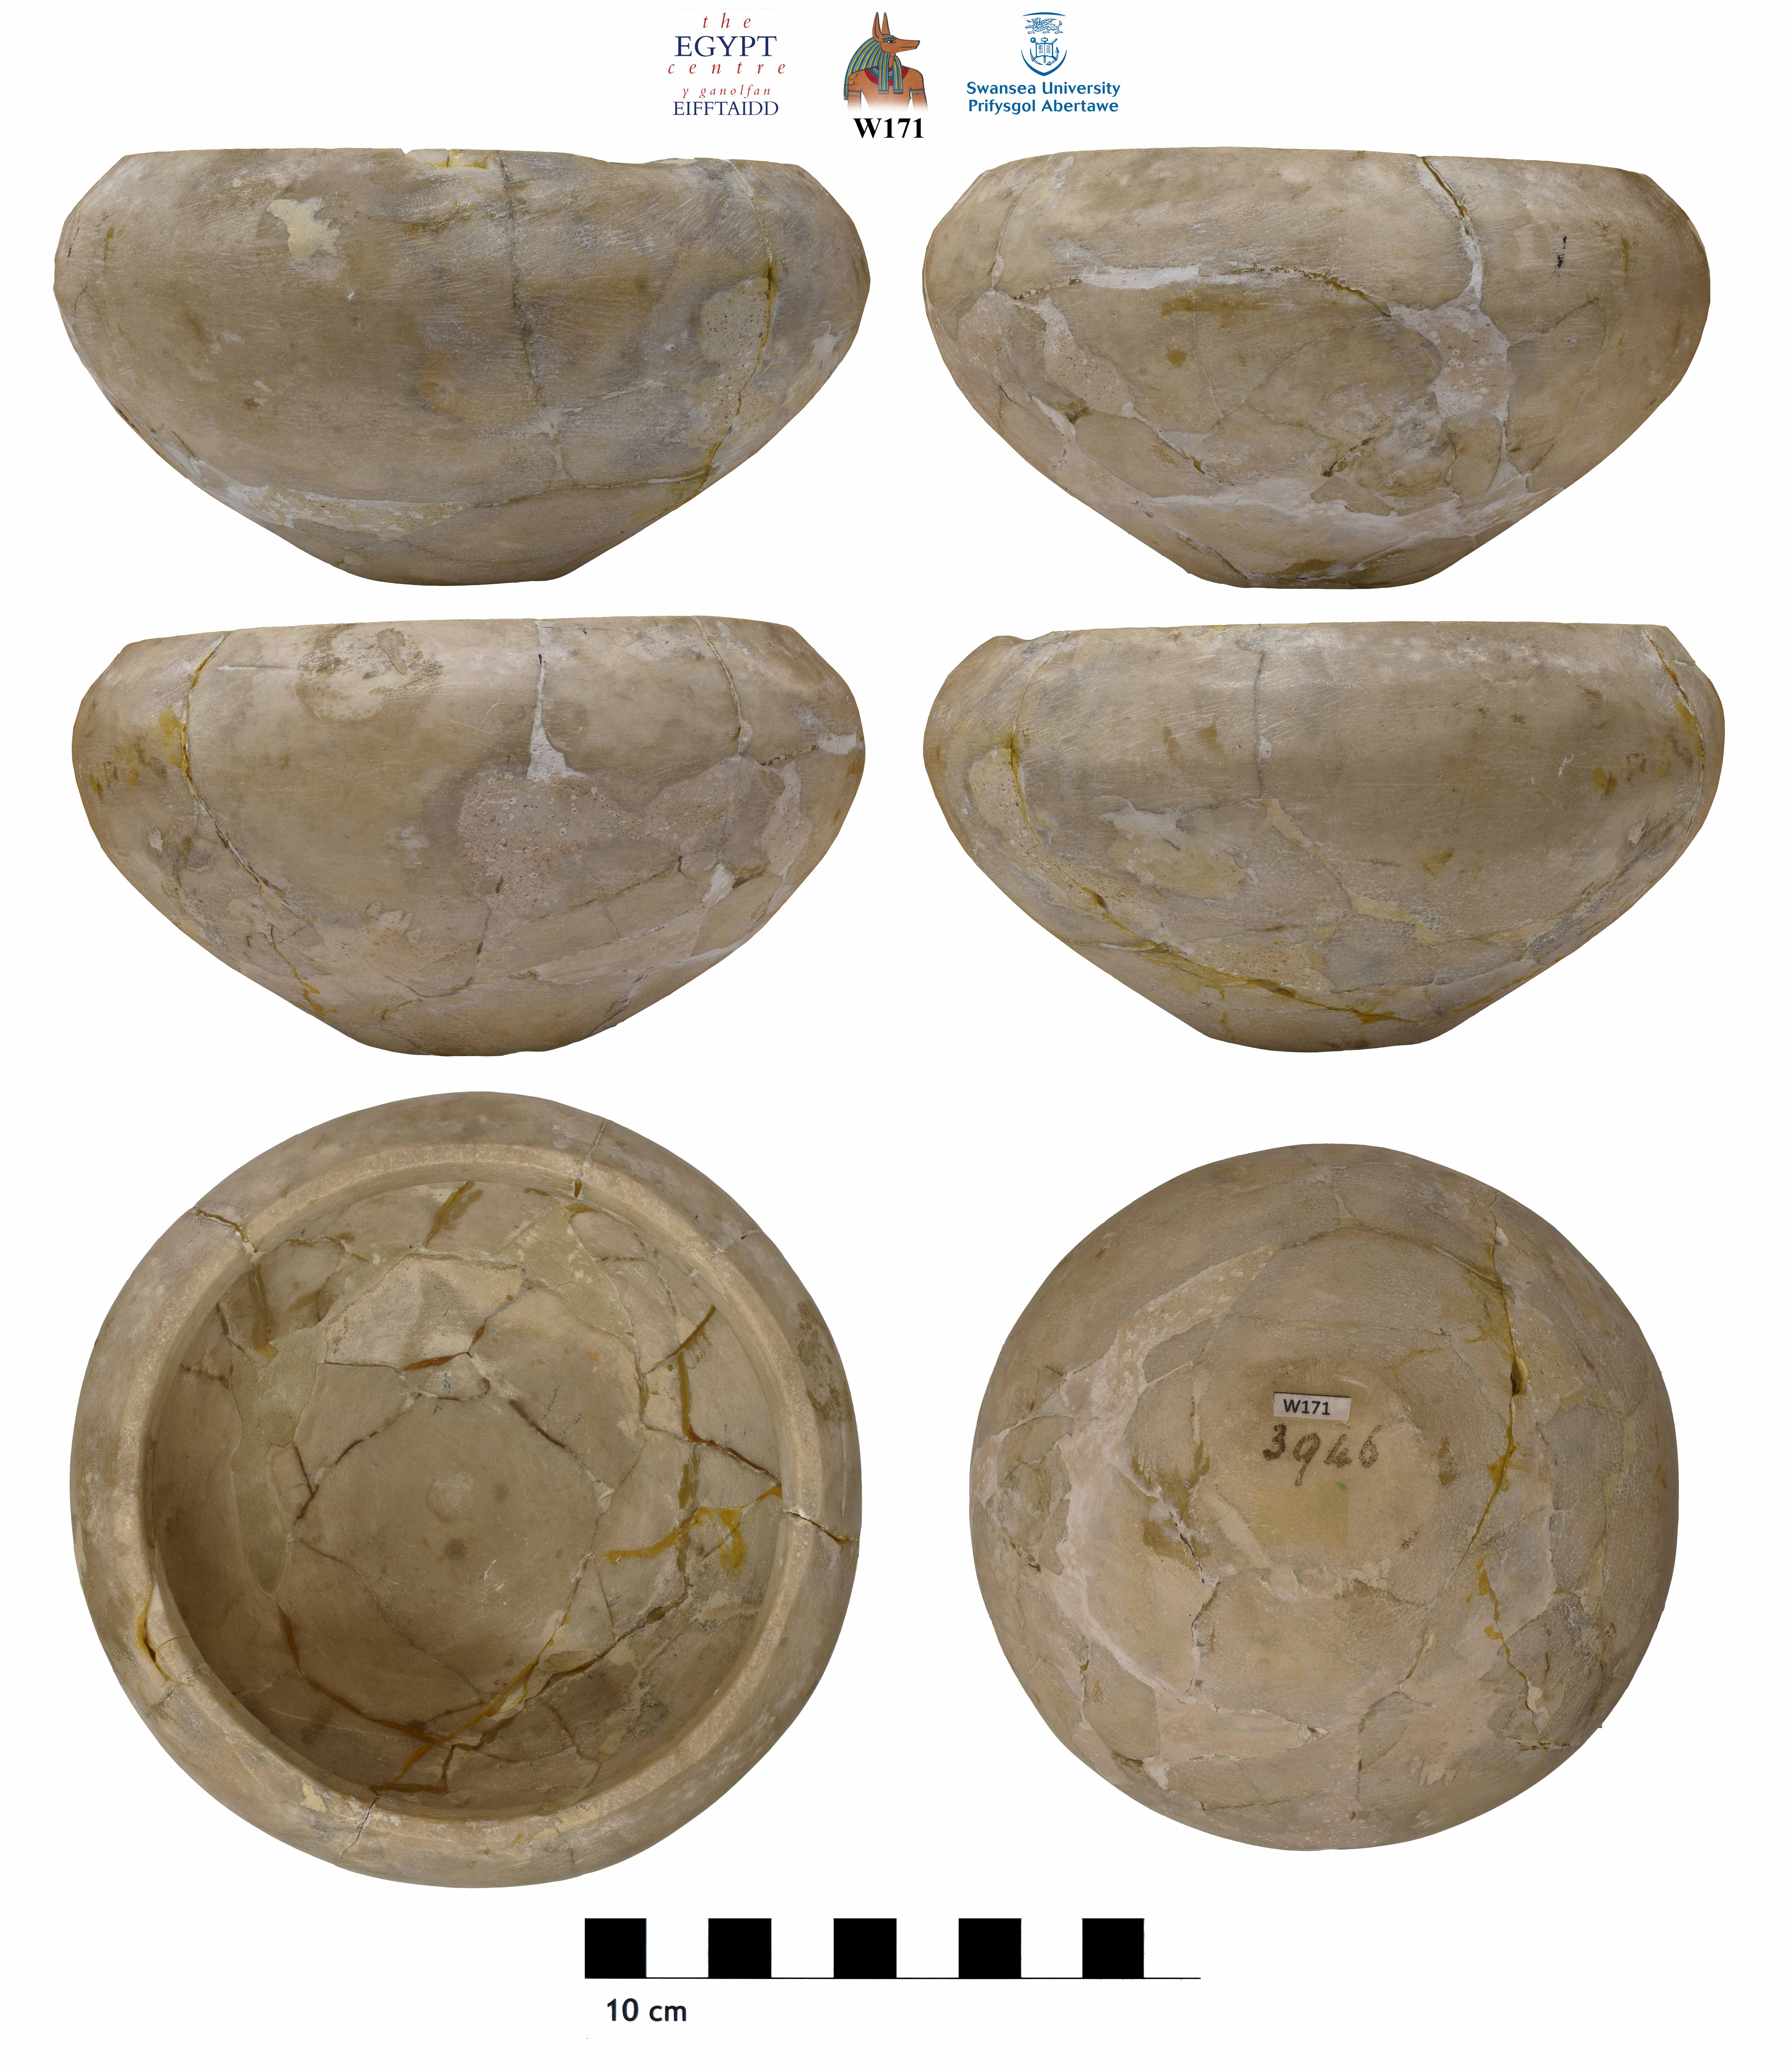 Image for: Limestone bowl